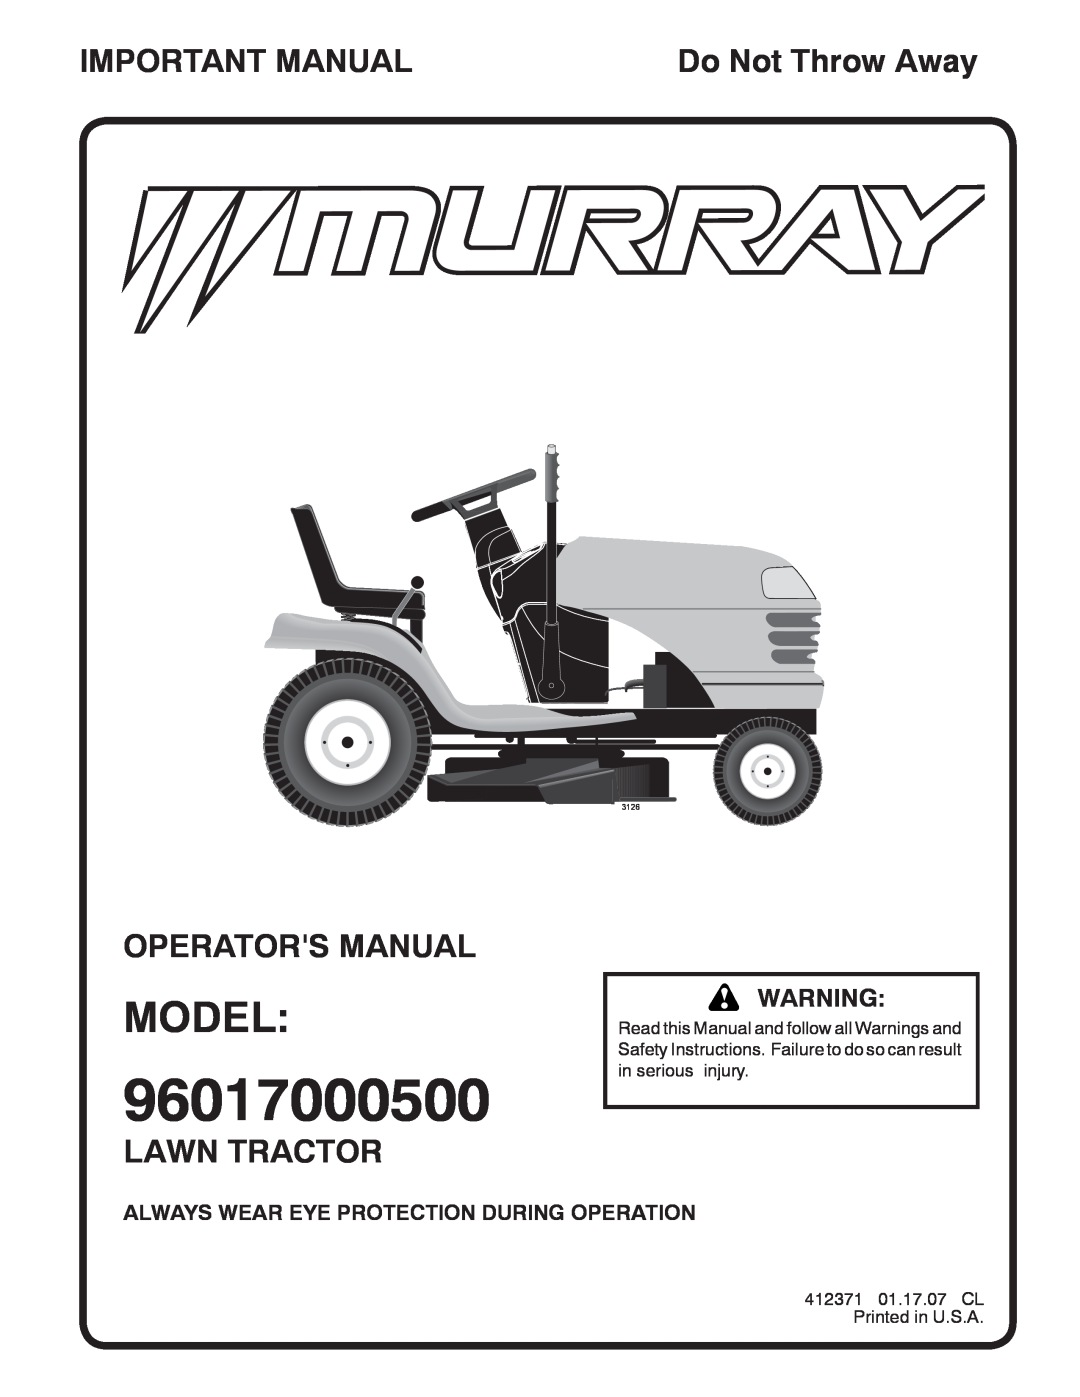 Murray 96017000500 manual Model, Important Manual, Operators Manual, Lawn Tractor, Do Not Throw Away, 3126 